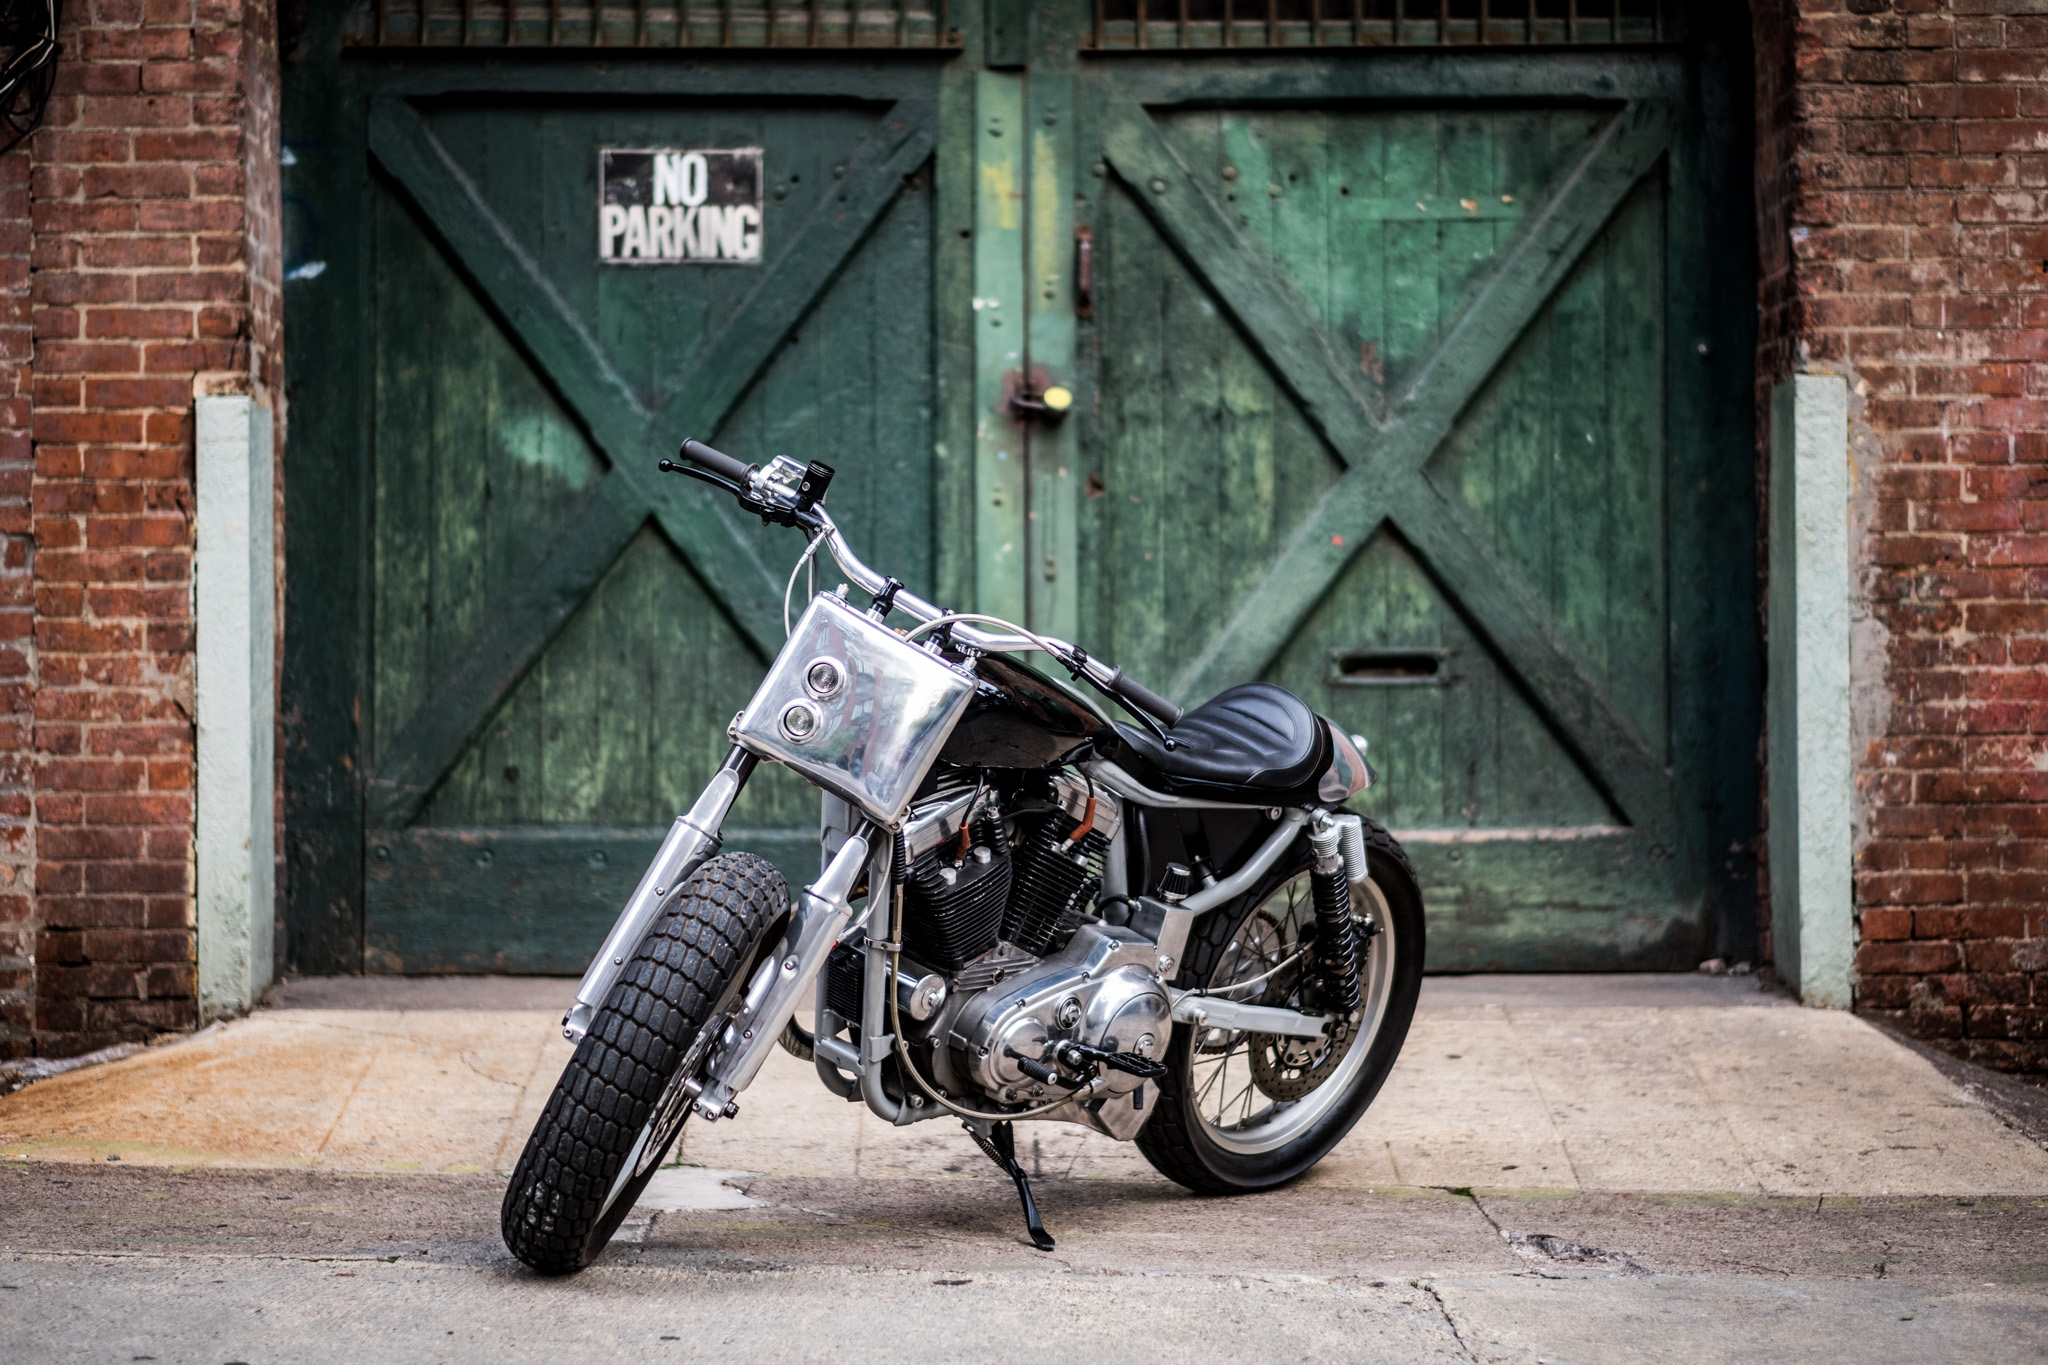 Tim Harney Motorcycles, Custom motorcycle, street tracker, Harley XL 883